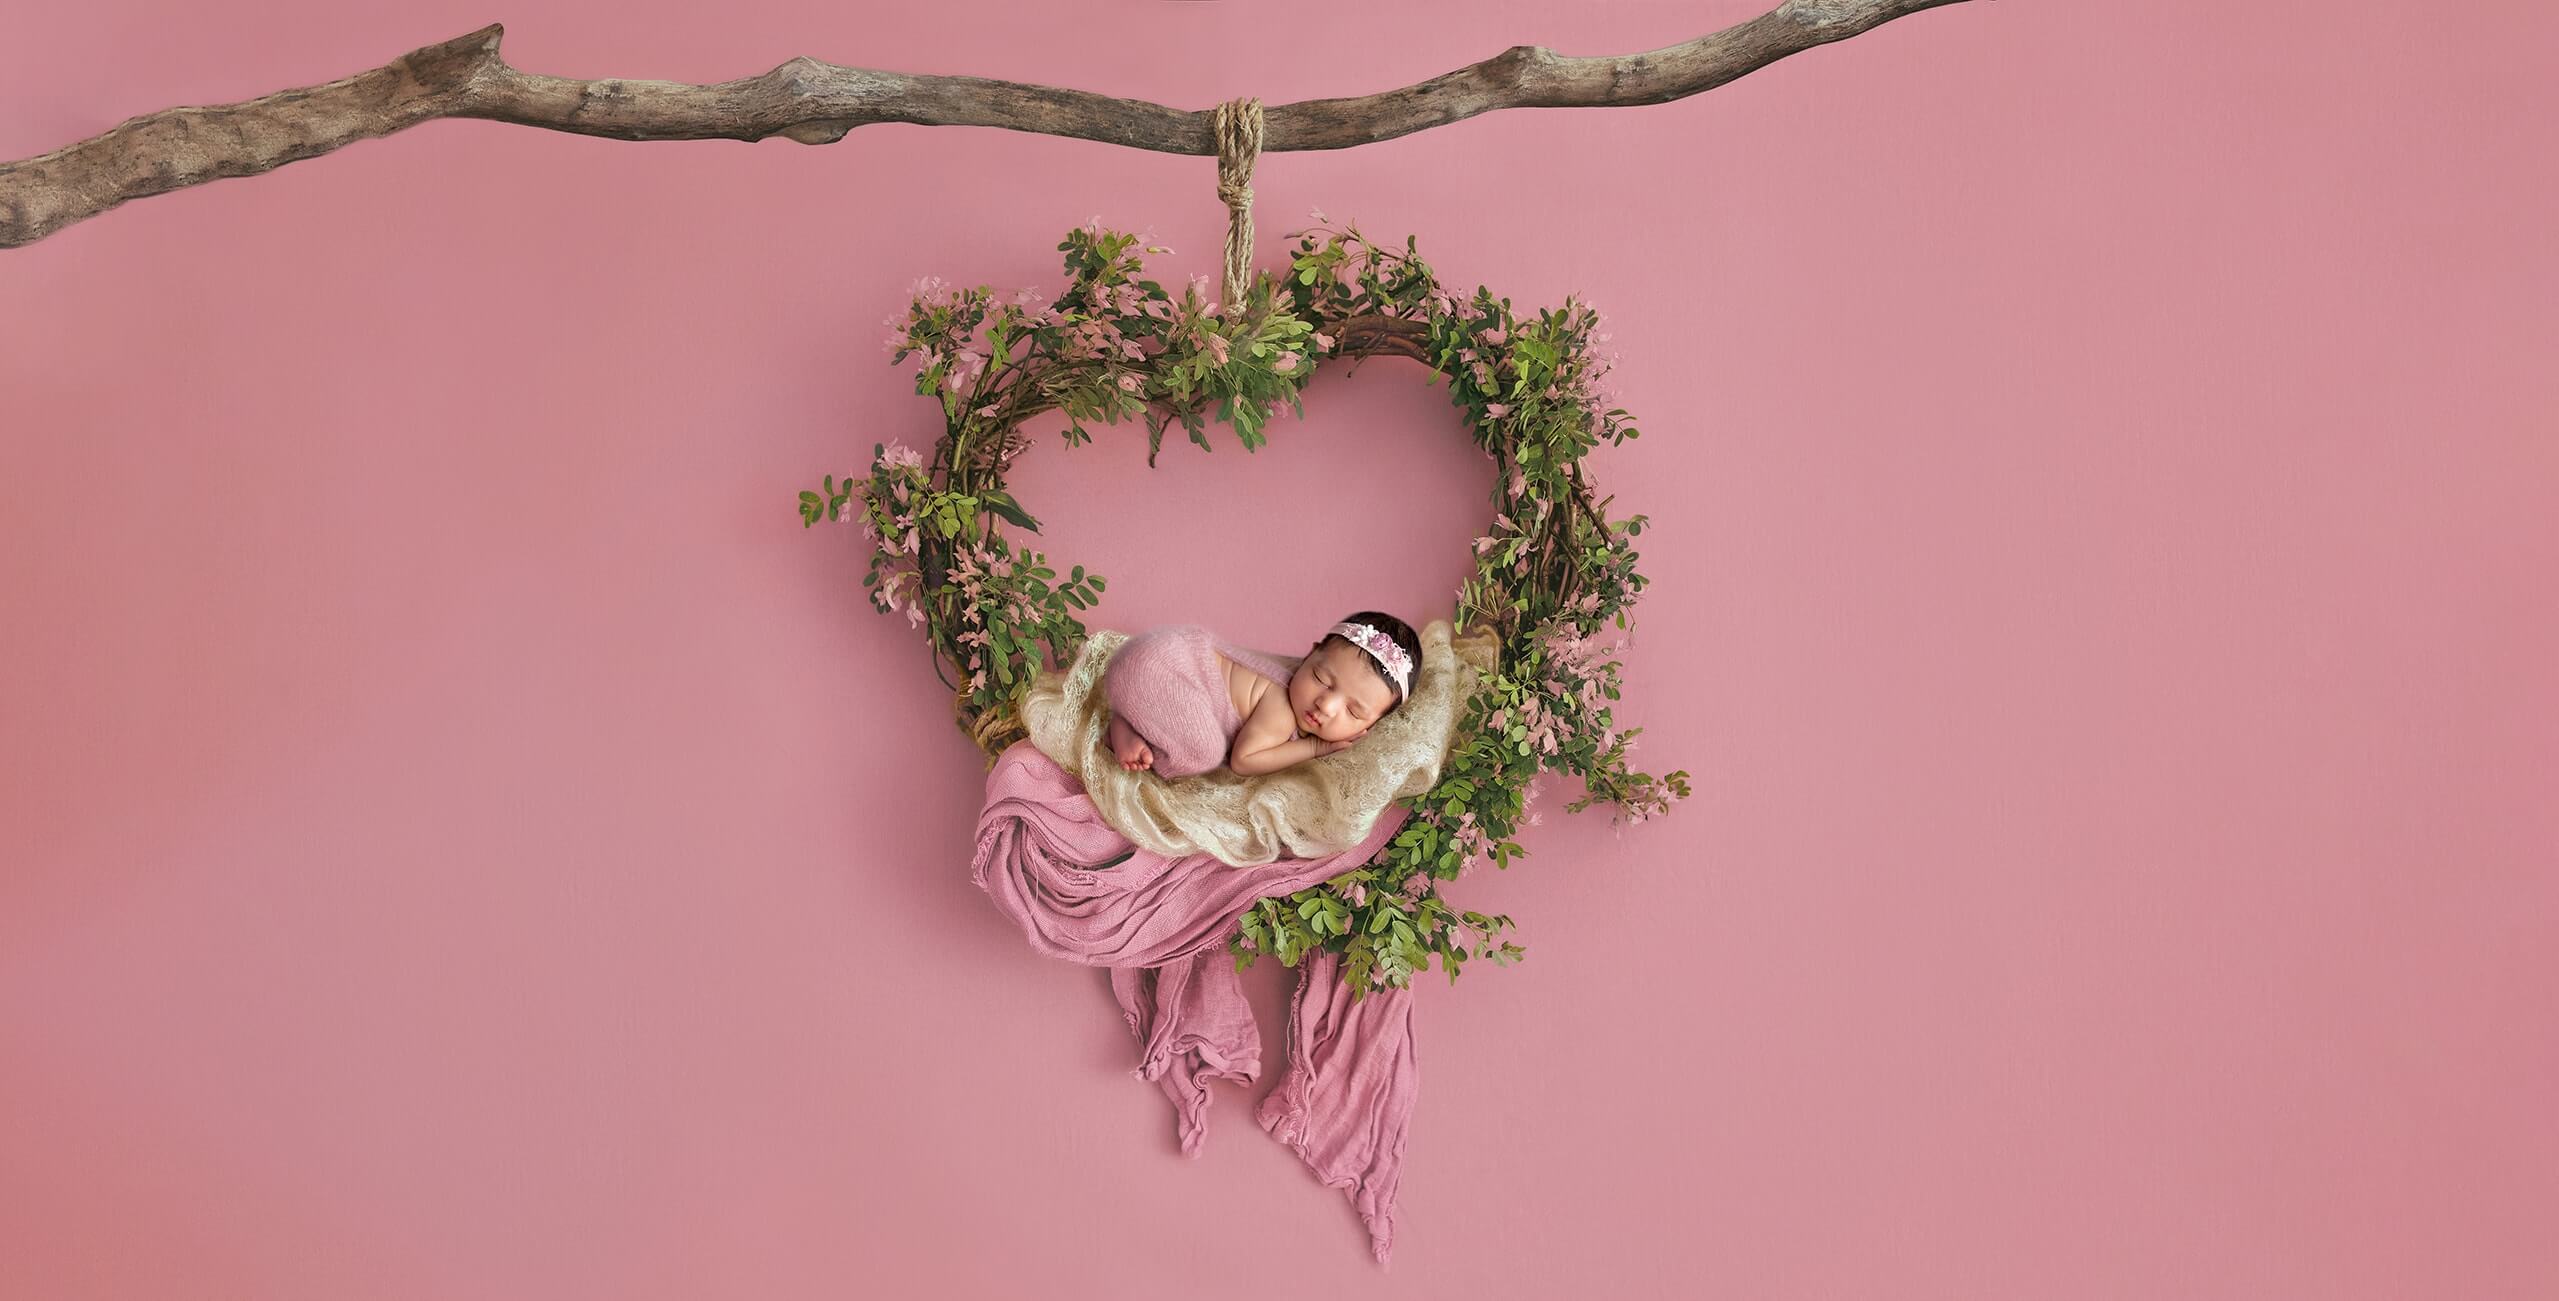 newborn photo baby sleep on hanging wreath pink back ground